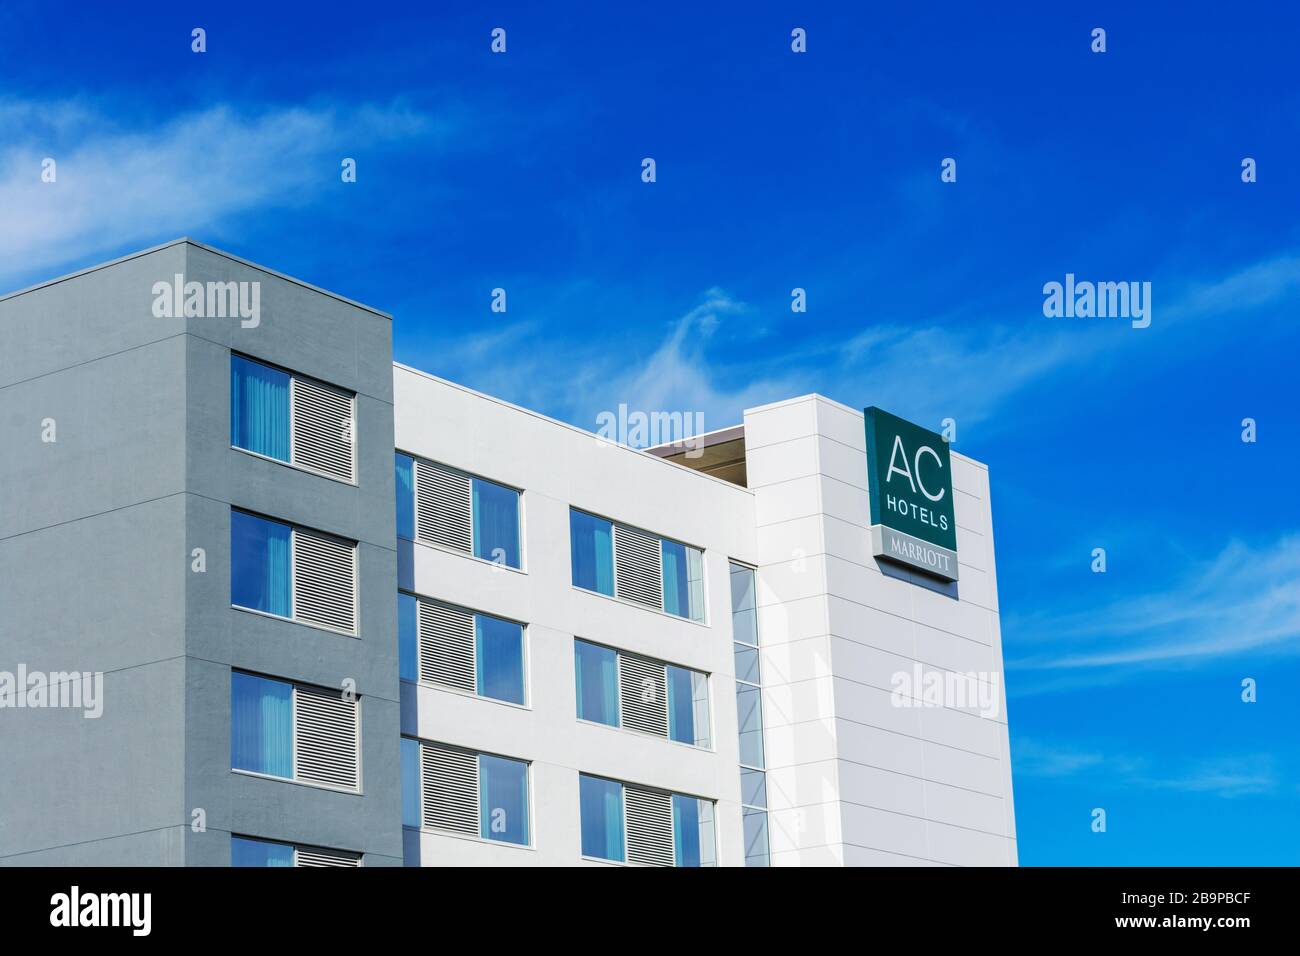 AC Hotels Marriott sign on a European inspired hotel under blue sky - South San Francisco, California, USA, California, USA - 2020 Stock Photo